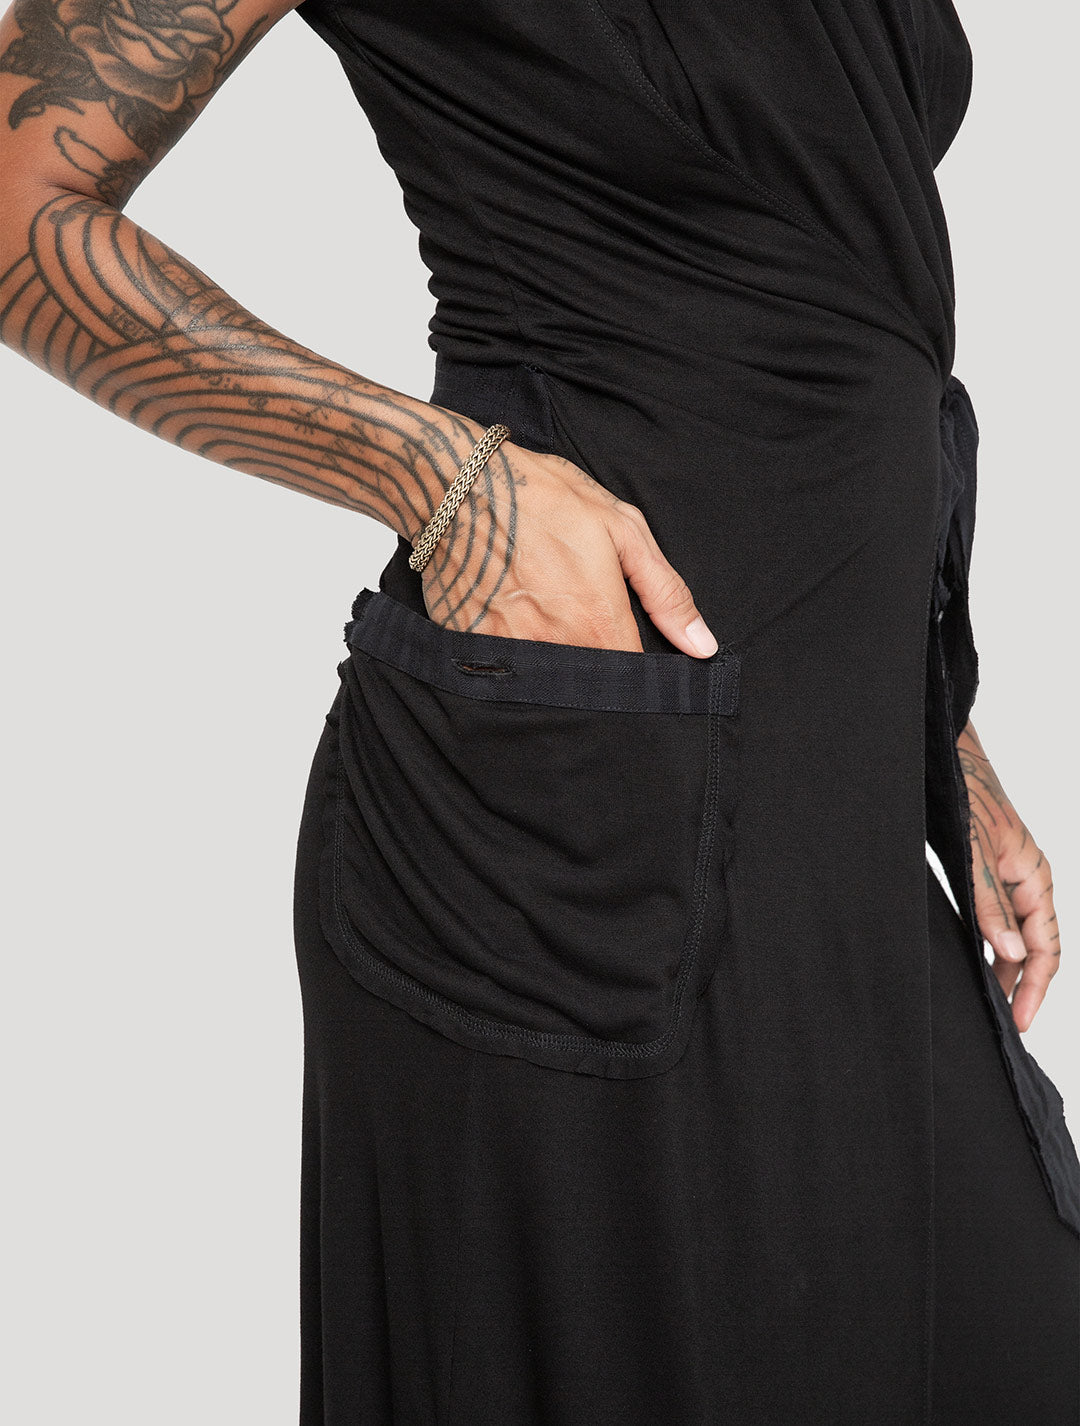 Black 'Sorcerer' Hooded Maxi Dress - Psylo Fashion